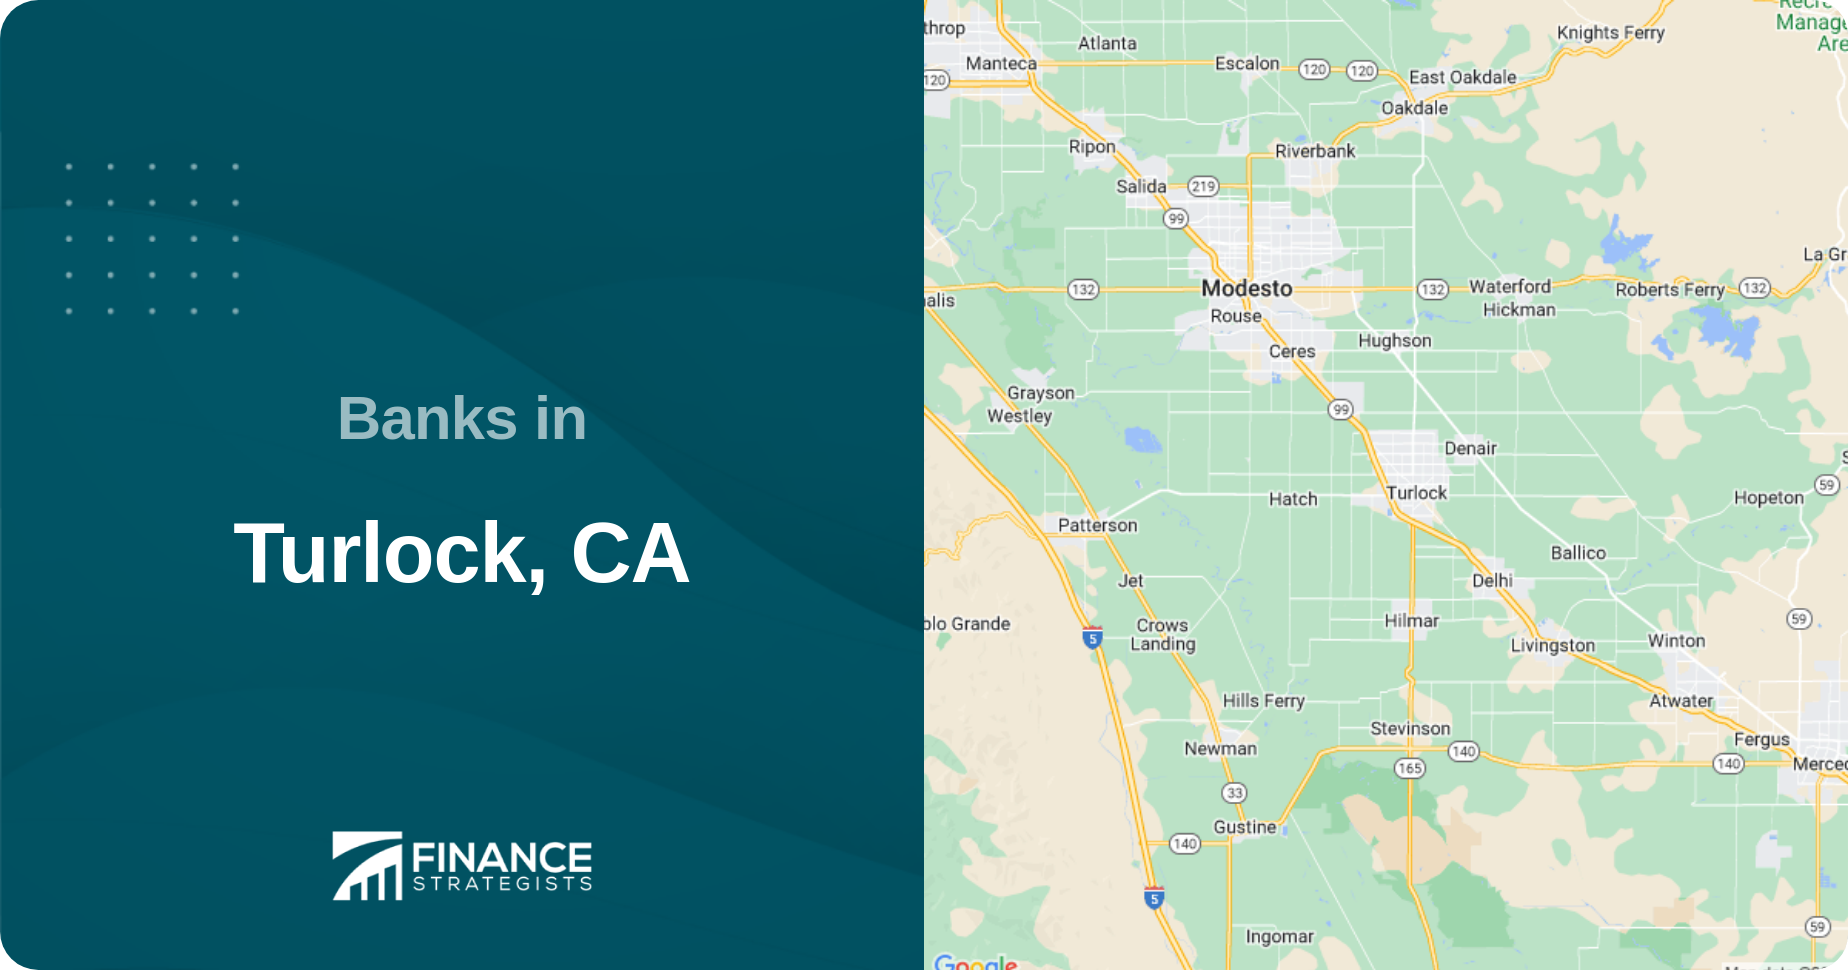 Banks in Turlock, CA